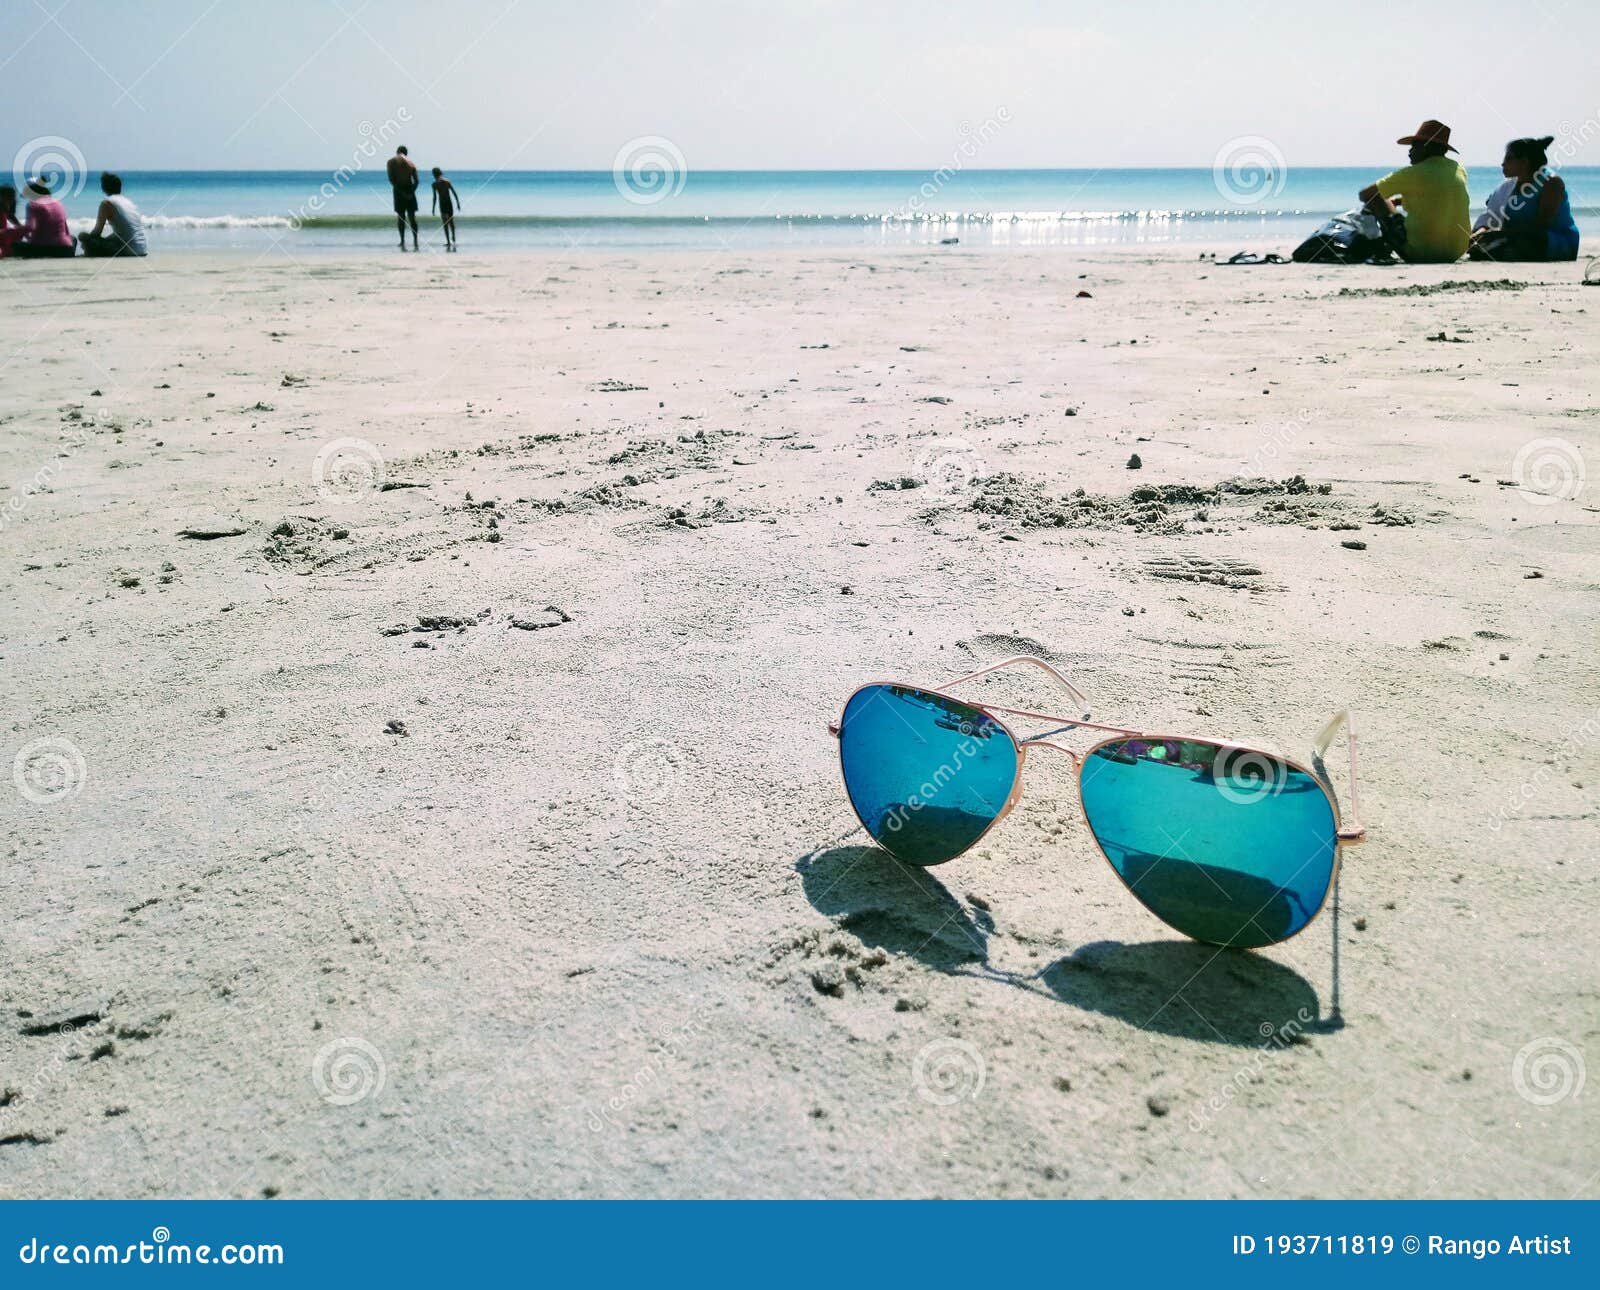 rayban blue aviator sunglasses in beach sand at havelock island